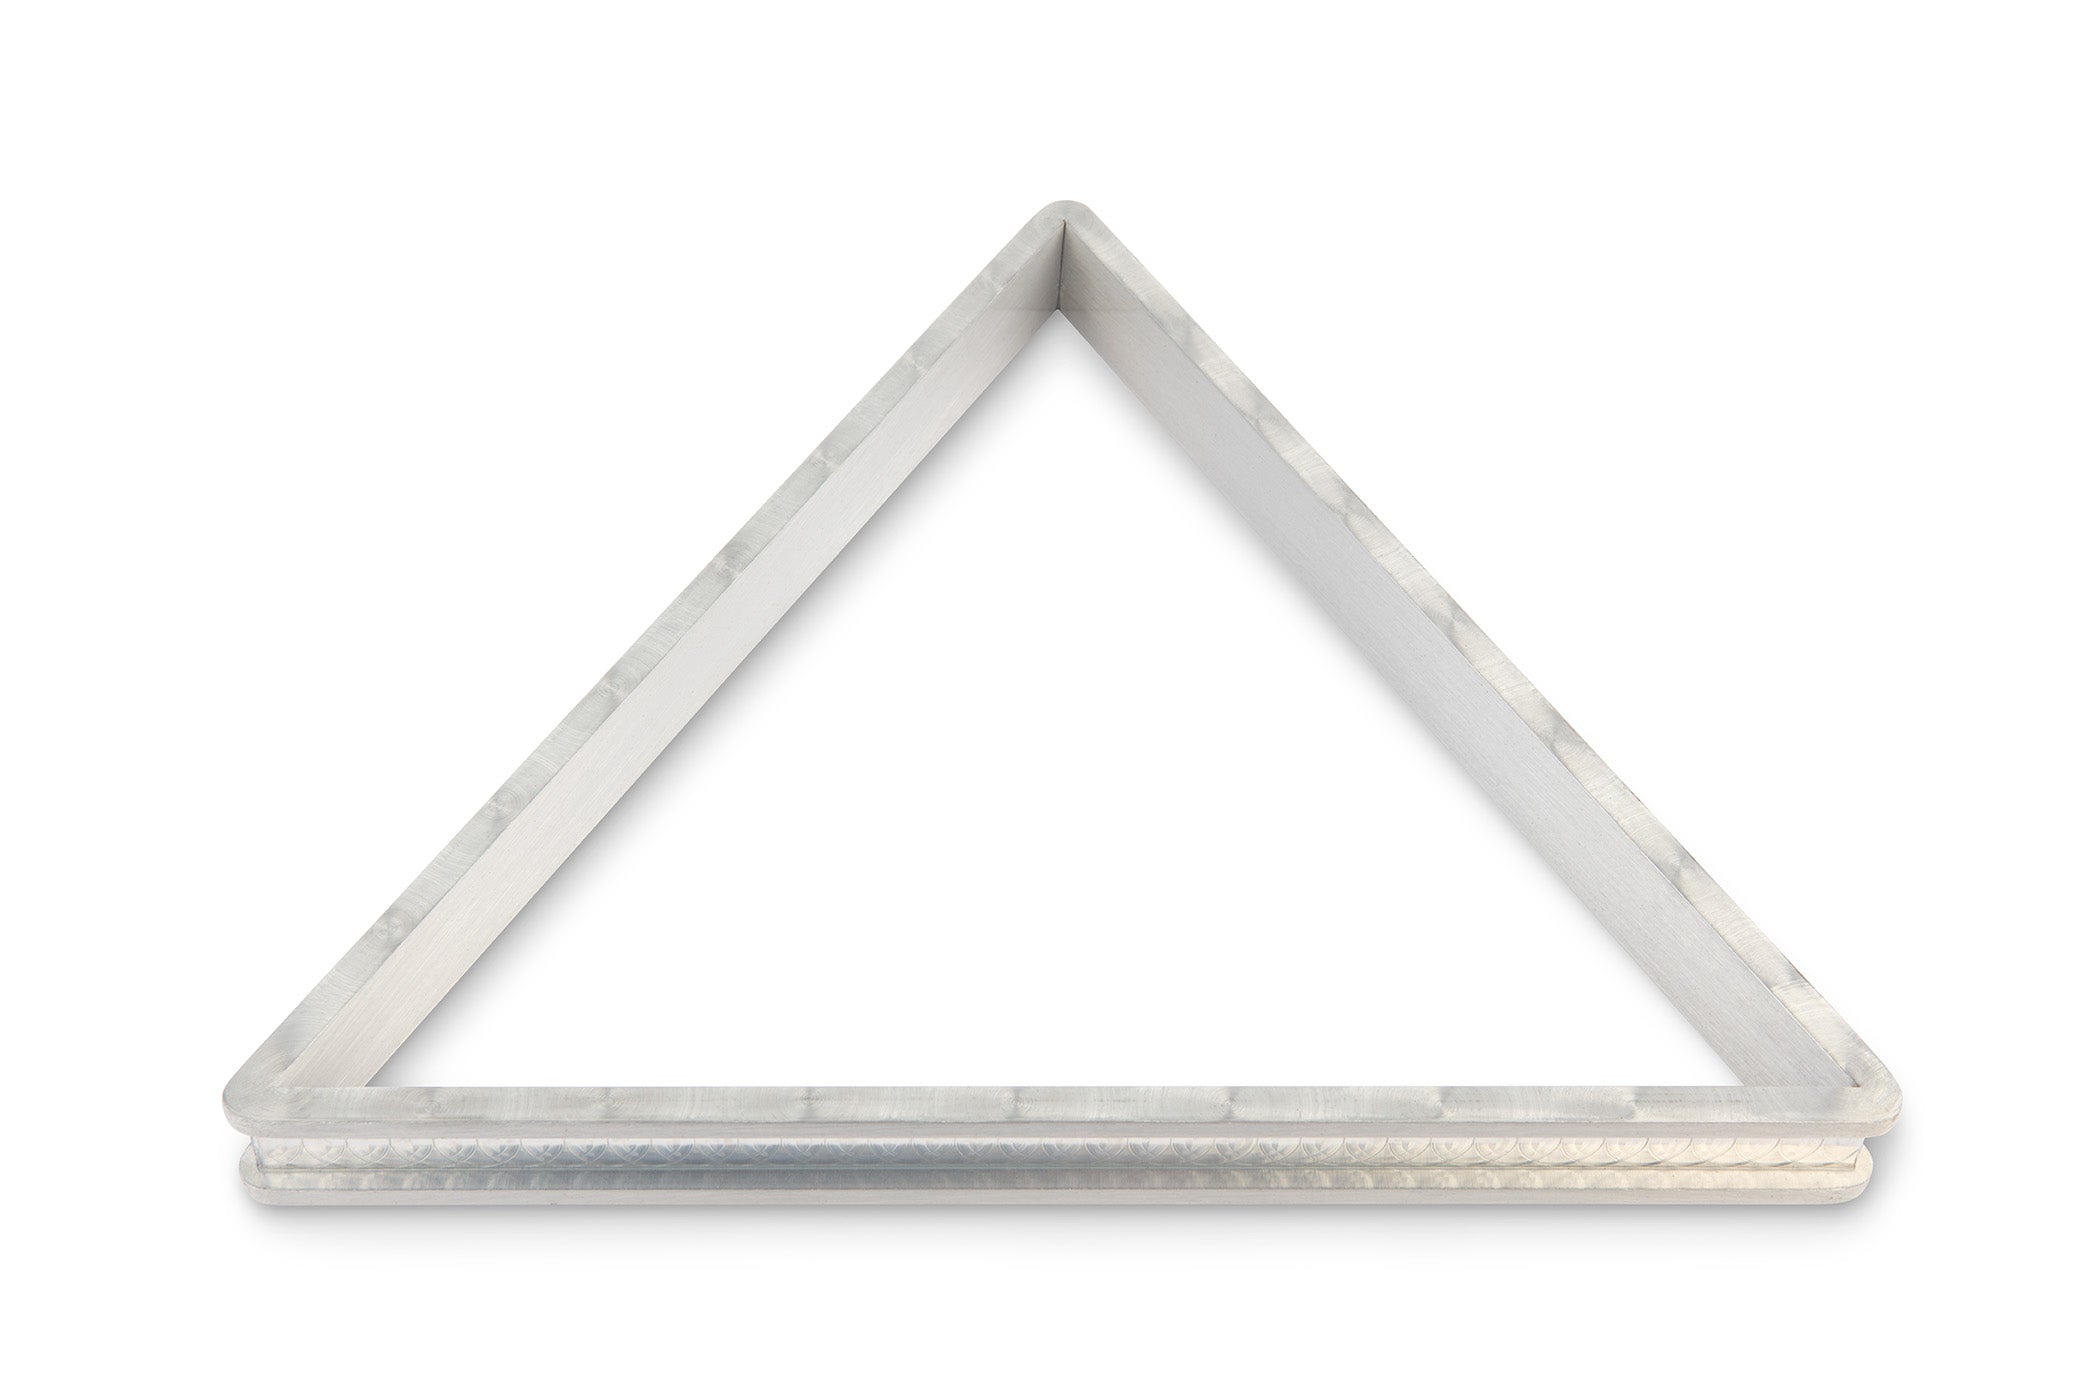 Aluminum Triangle Rack - Blatt Billiards